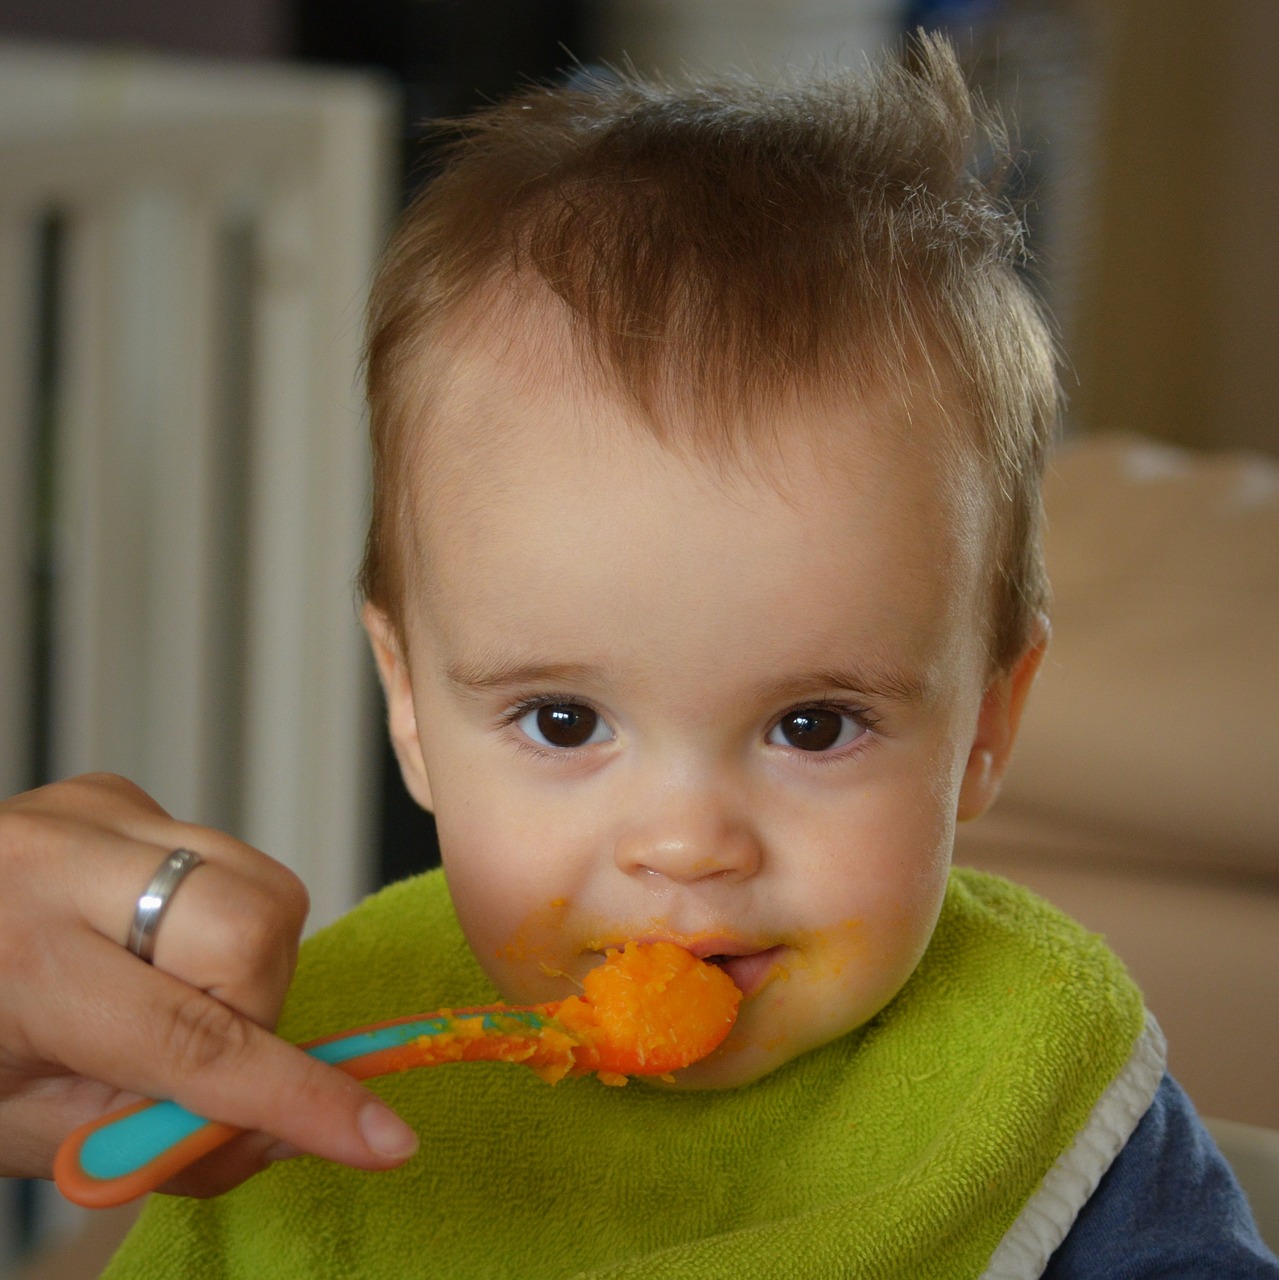 RECALL: Gerber Baby Food